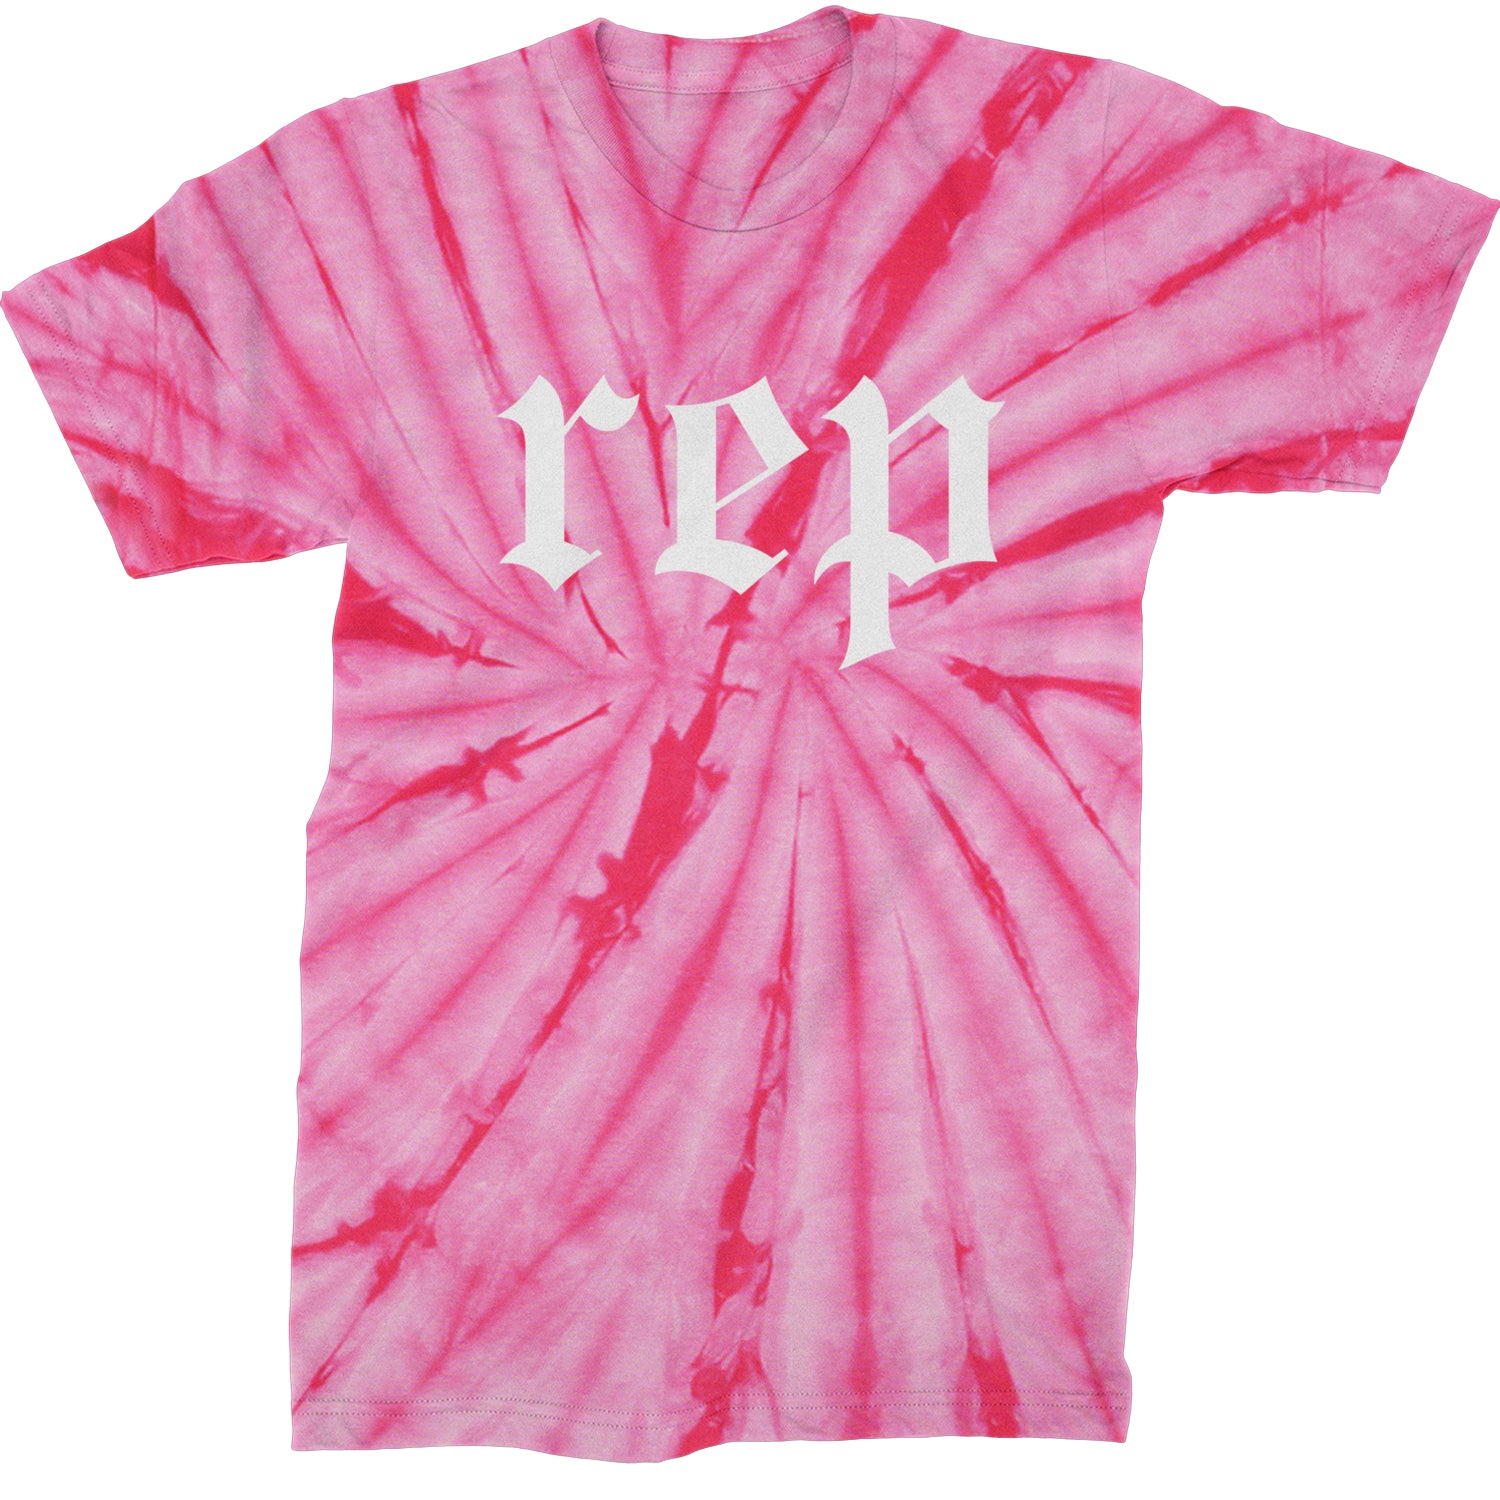 REP Reputation Eras Music Lover Gift Fan Favorite Mens T-shirt Tie-Dye Spider Pink